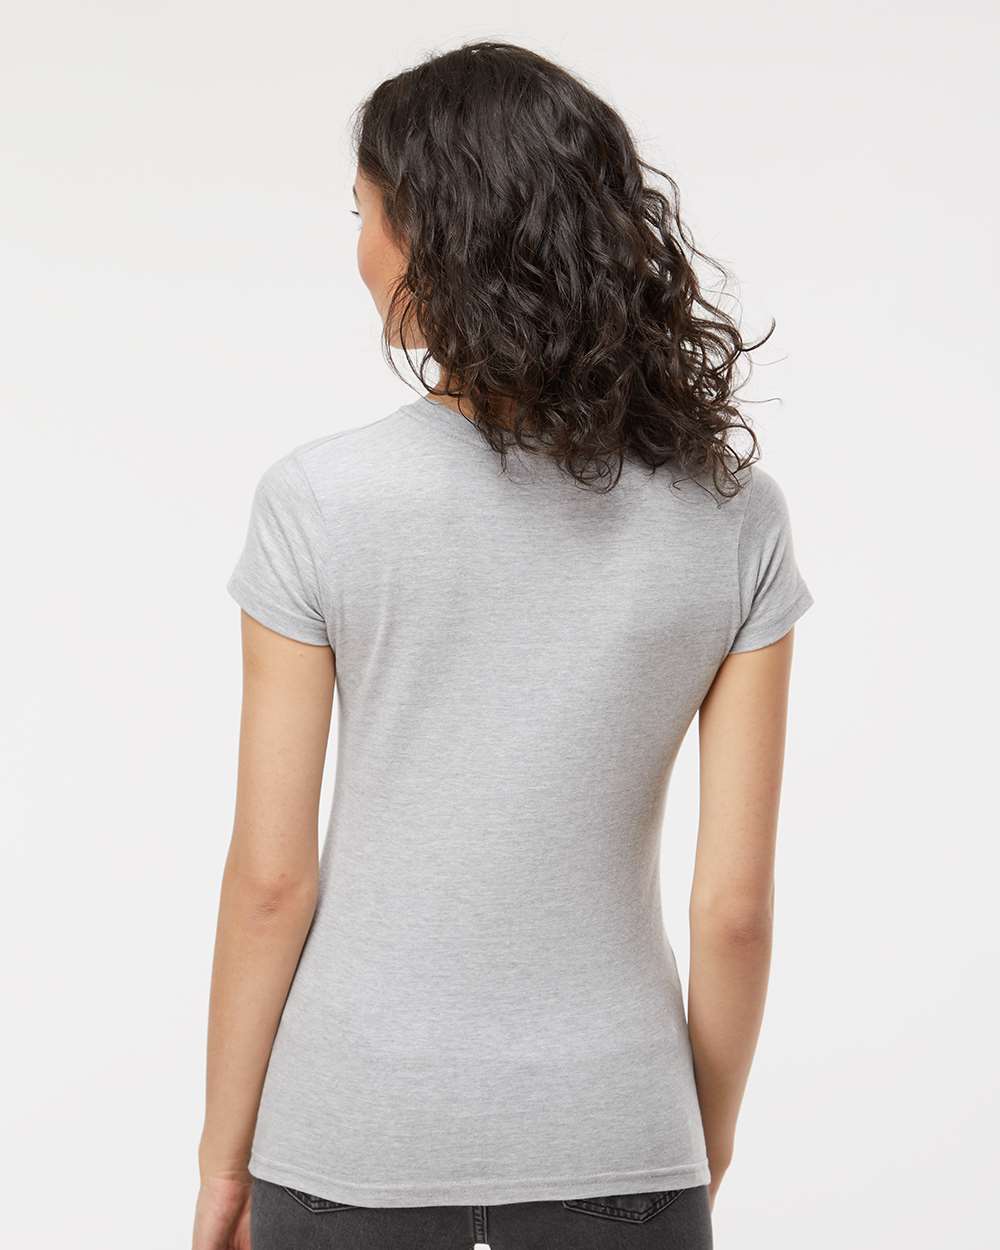 M&O Women's Fine Jersey T-Shirt 4513 #colormdl_Heather Grey